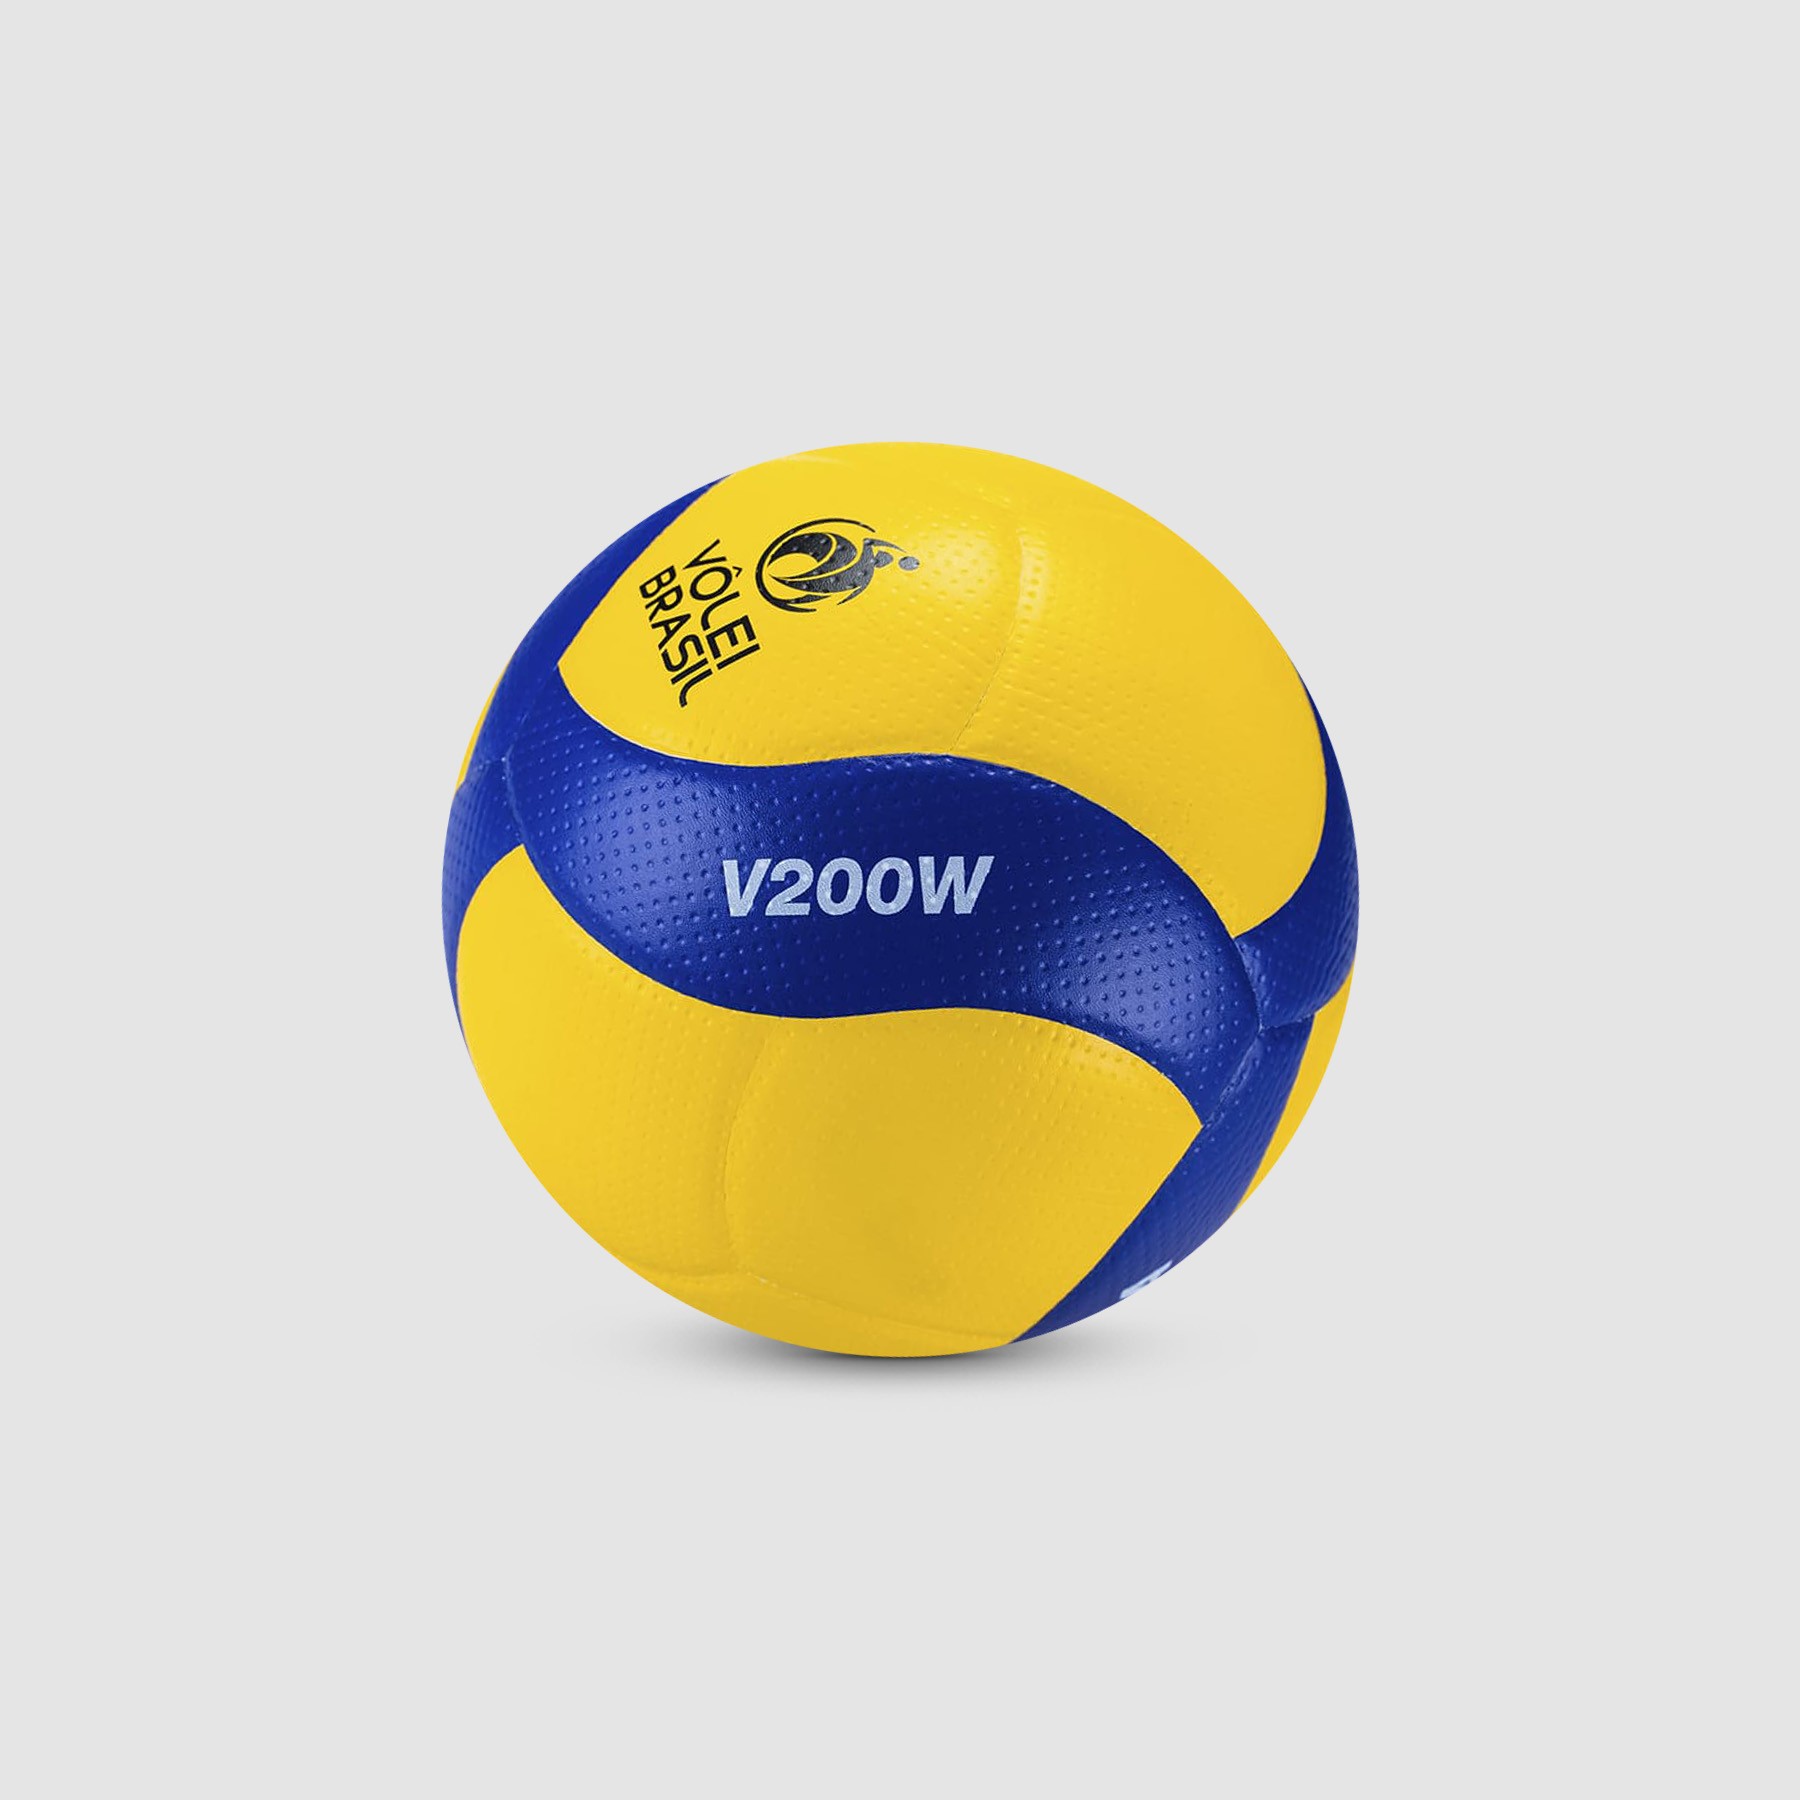 Balón de Voleibol Mikasa MVA200 No.5 - voleigram - Tienda Oficial